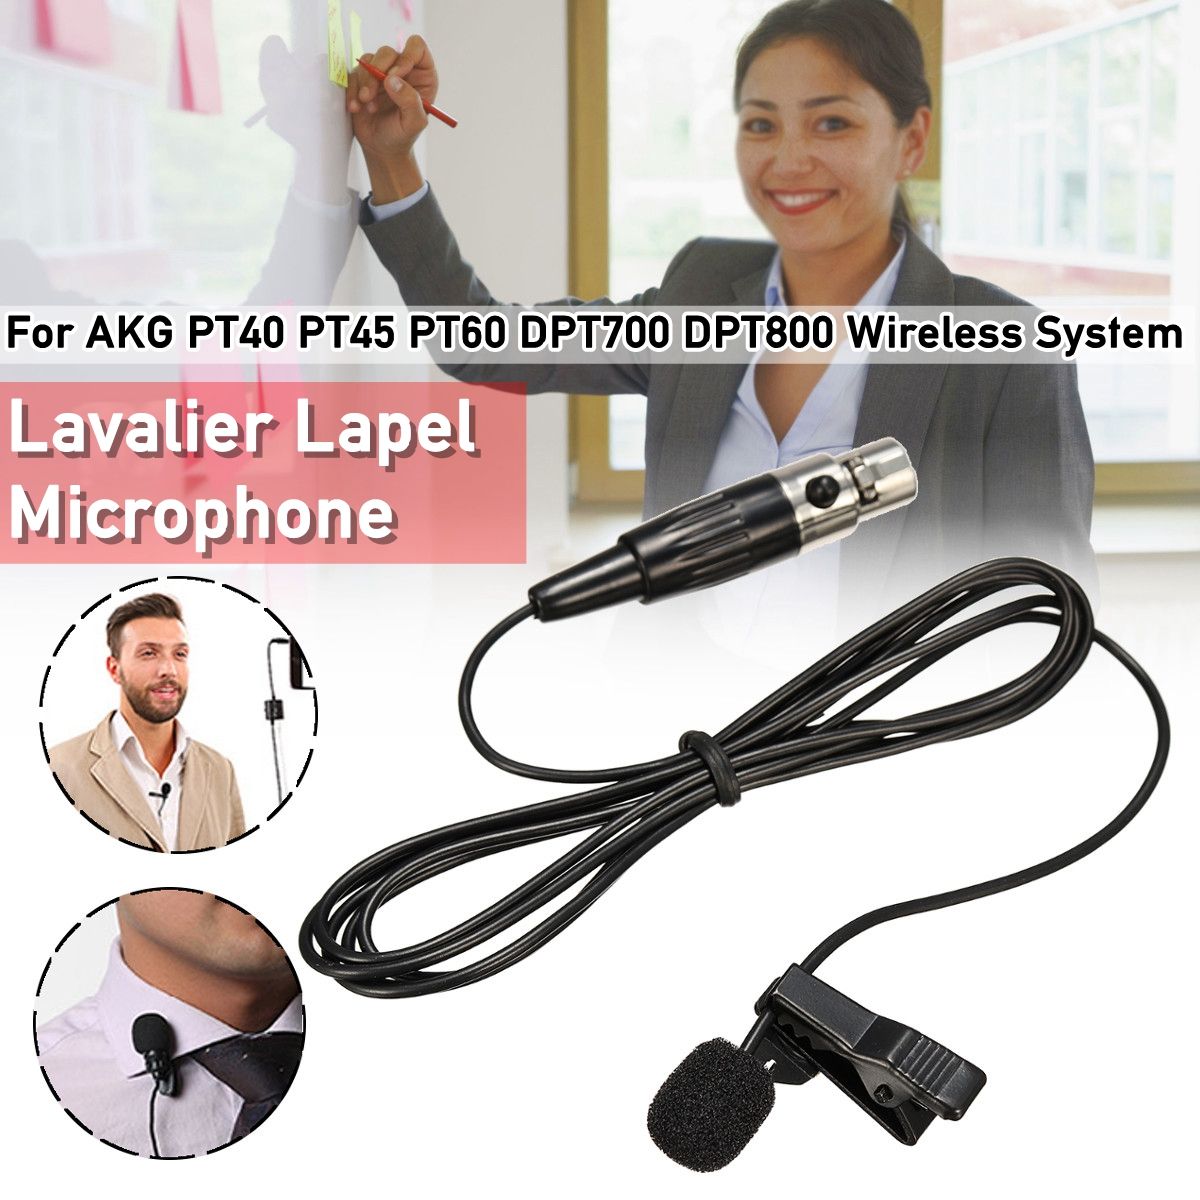 Lavalier-Lapel-Microphone-For-AKG-PT40-PT45-PT60-DPT700-DPT800-Wireless-System-For-Teaching-Speach-1401123